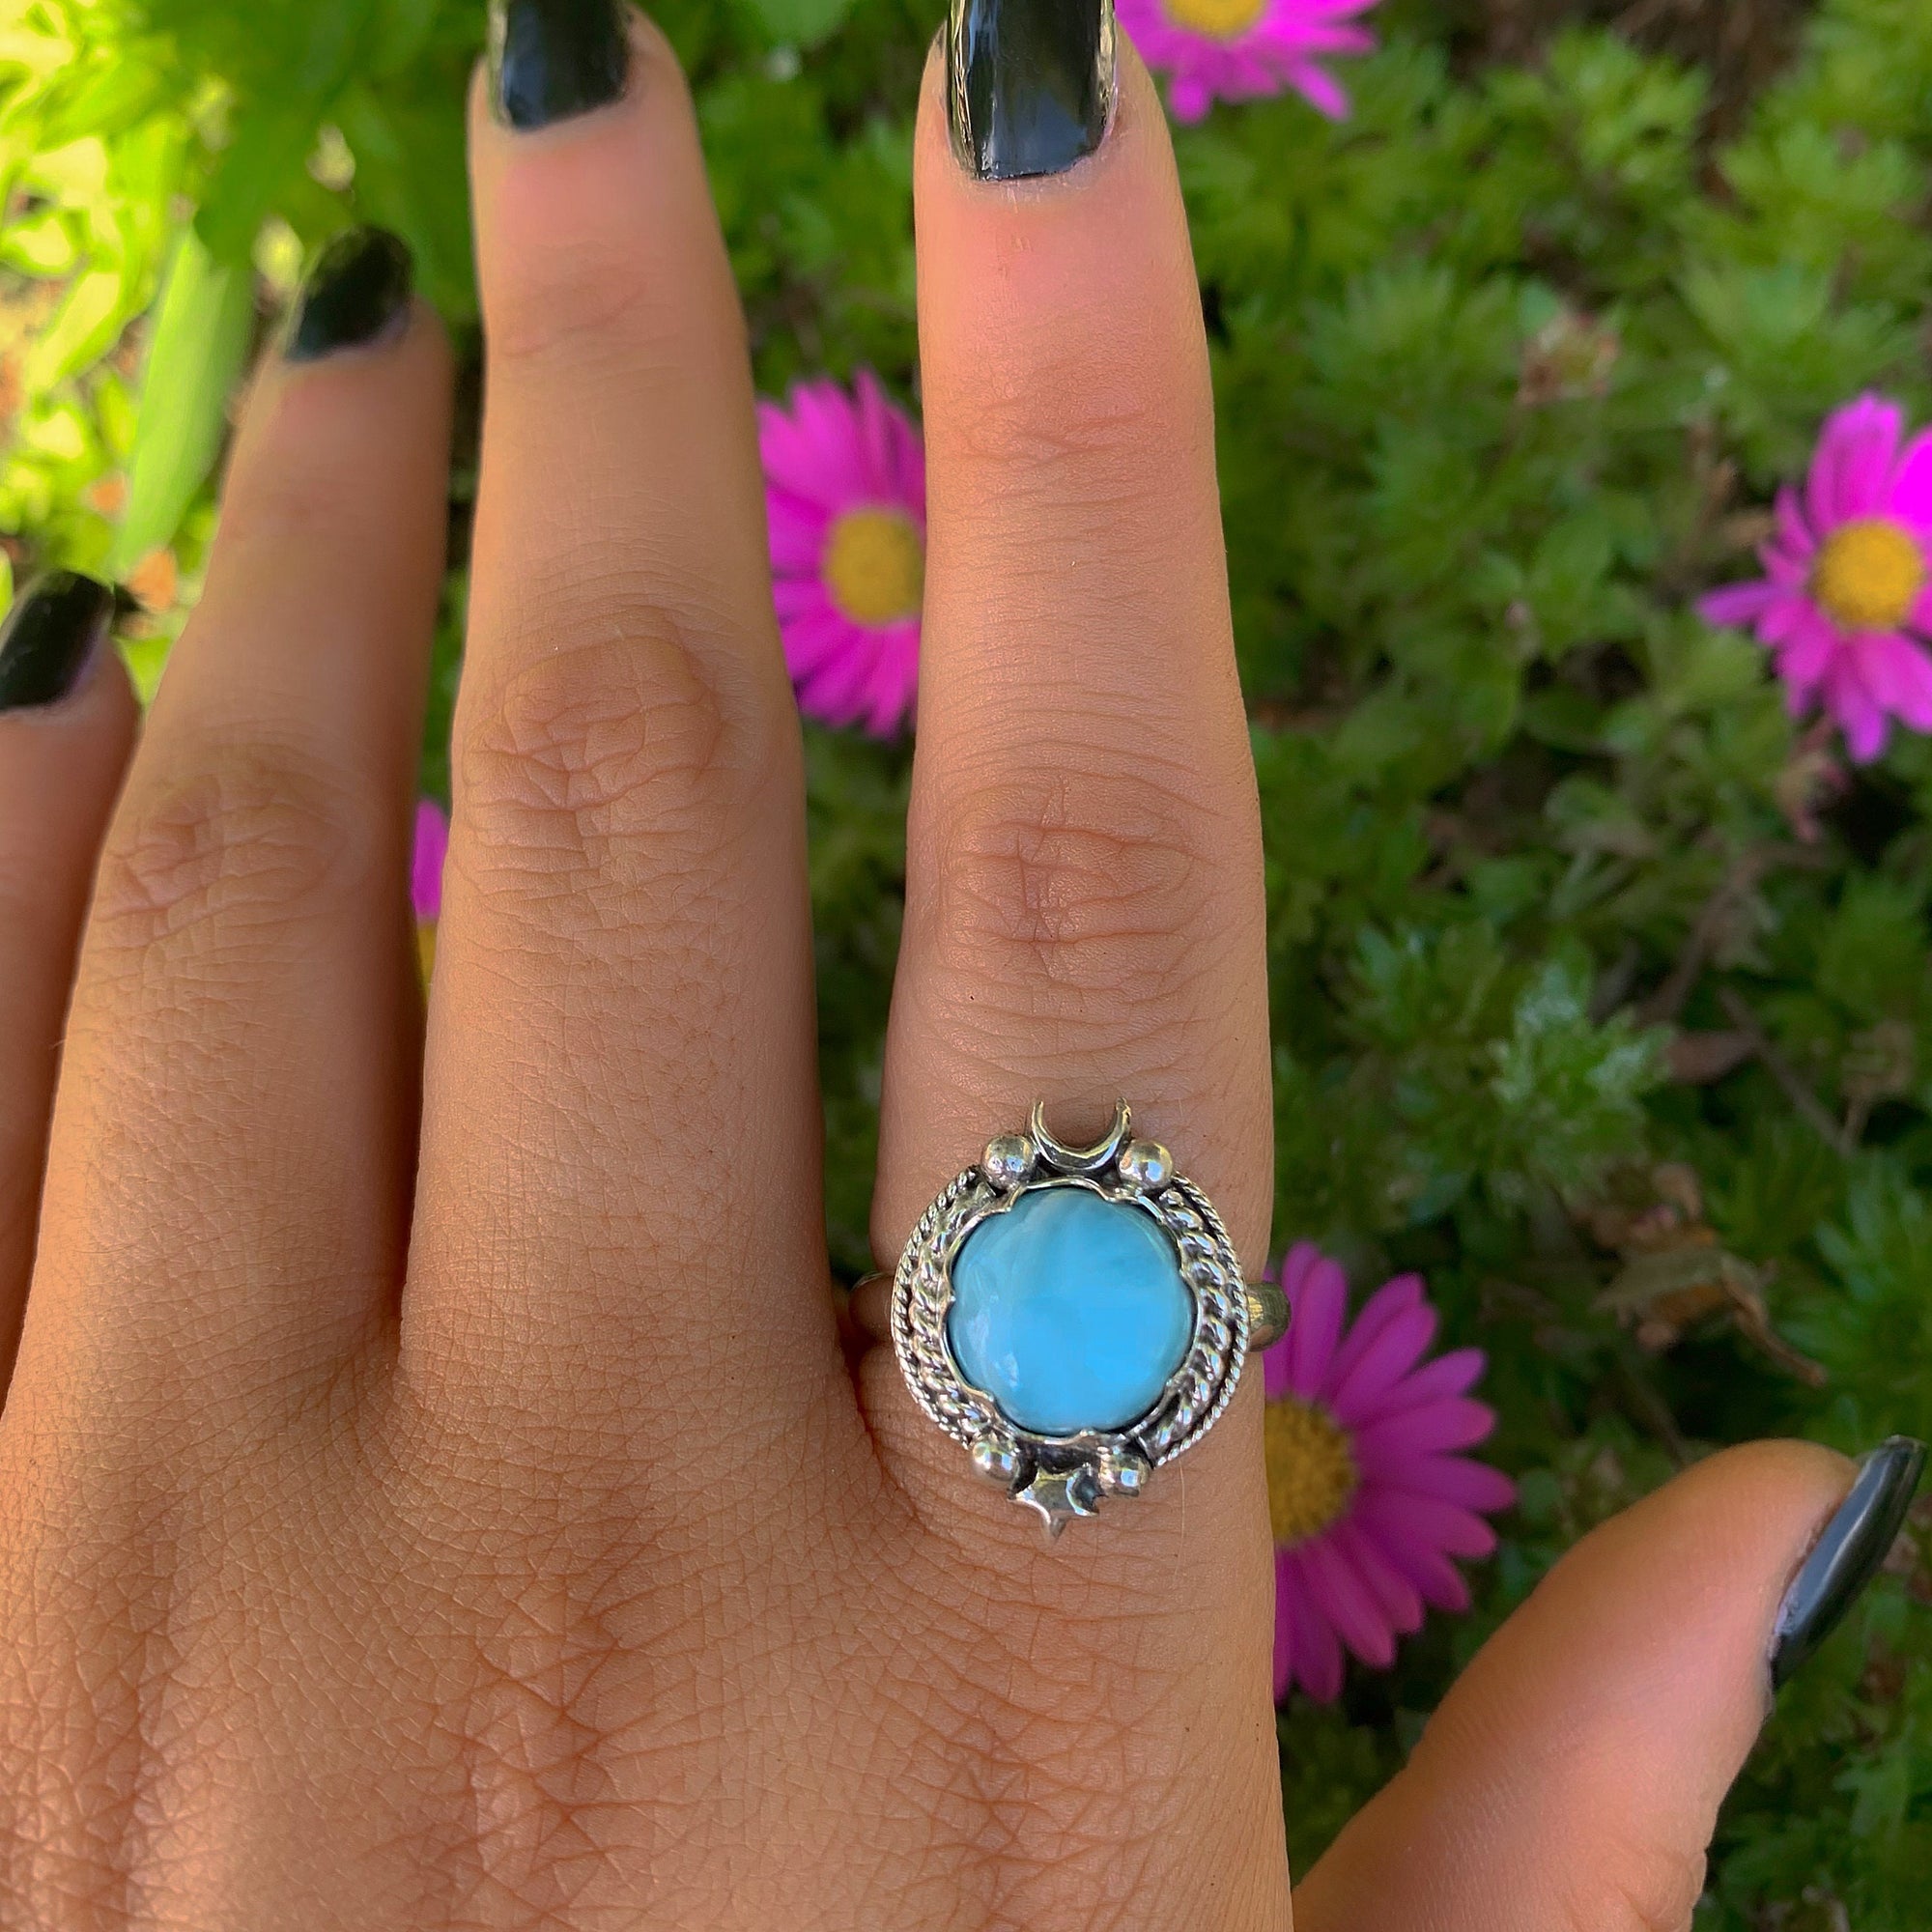 Larimar Ring - Size 9 to 9 1/4 - Sterling Silver - Blue Larimar Ring - Round Larimar Ring - Larimar Jewelry - Handcrafted Larimar Moon Ring